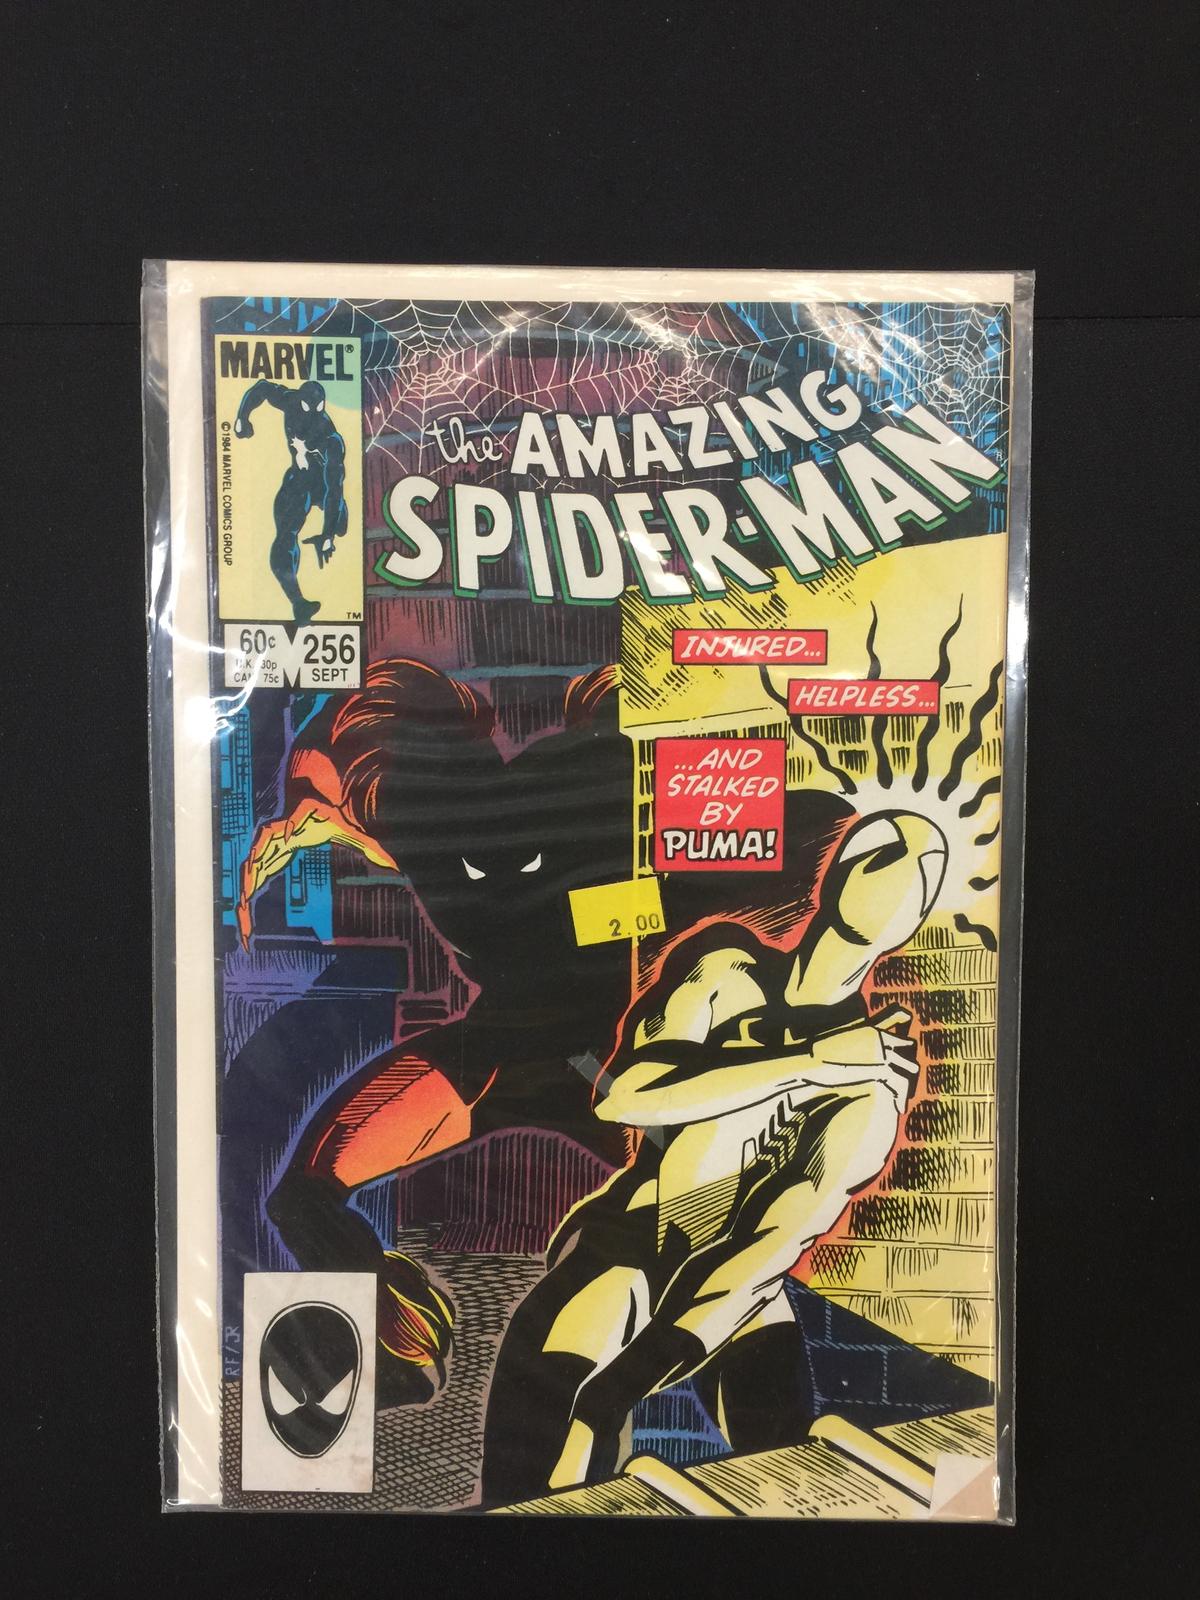 The Amazing Spider-man #256 - Marvel Comic Book